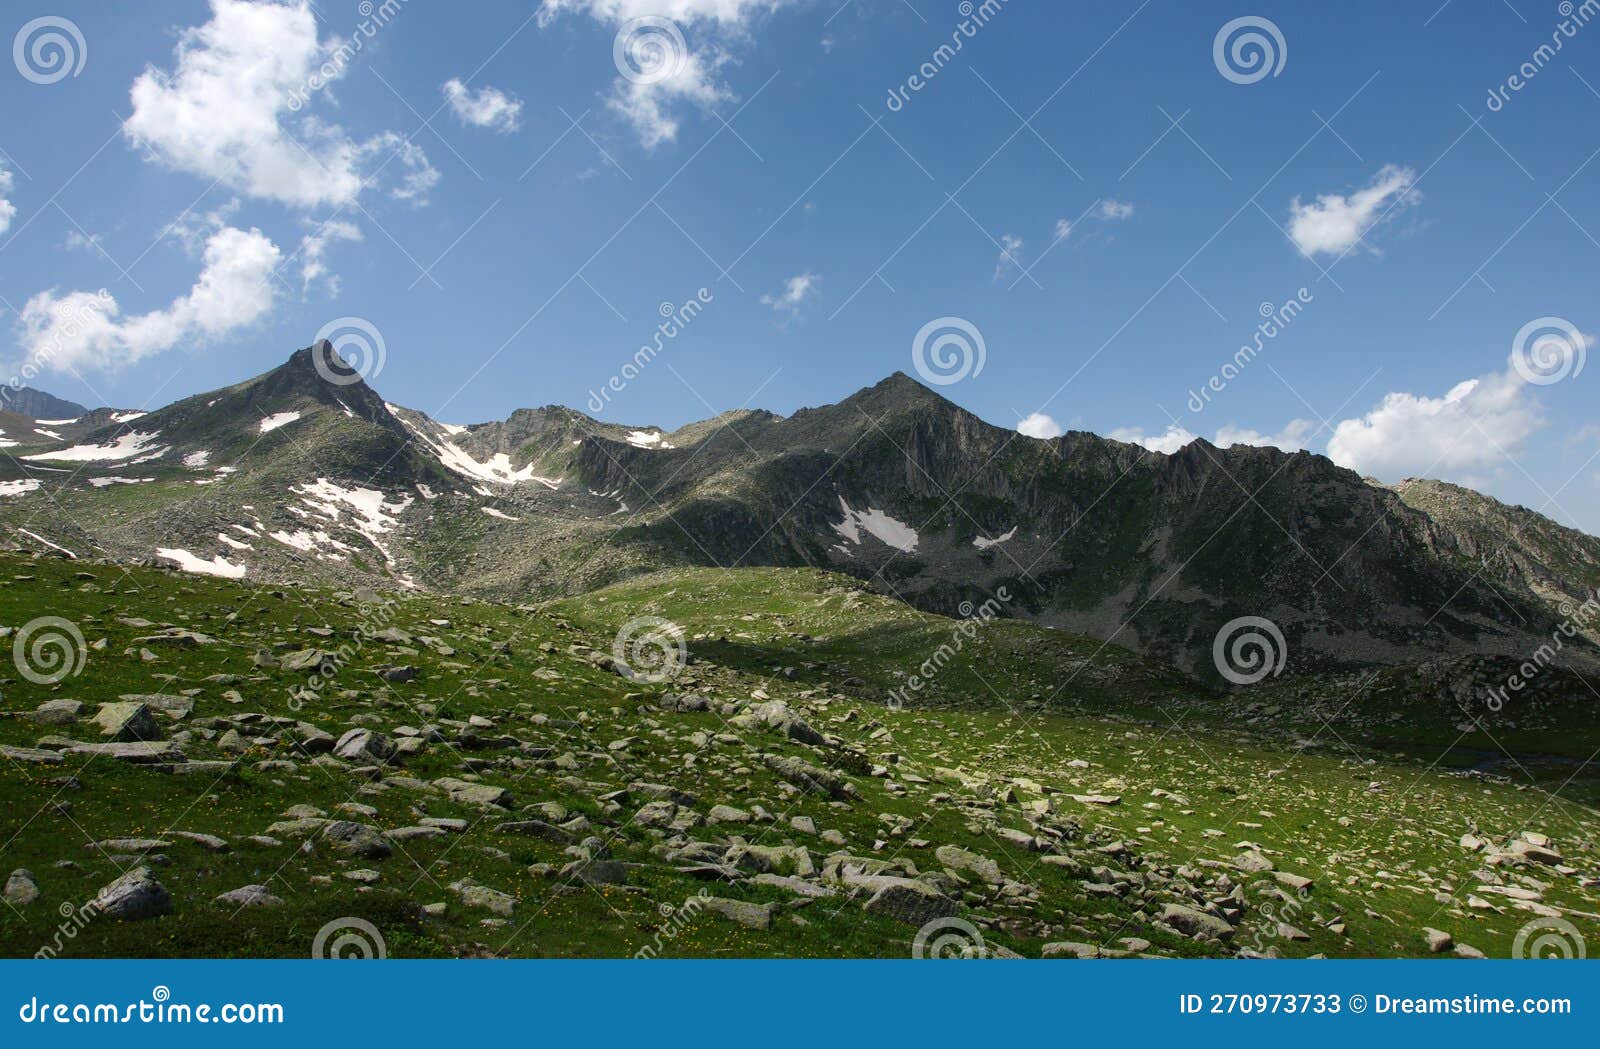 Kackar Mountains - Rize stock image. Image of ridge - 270973733